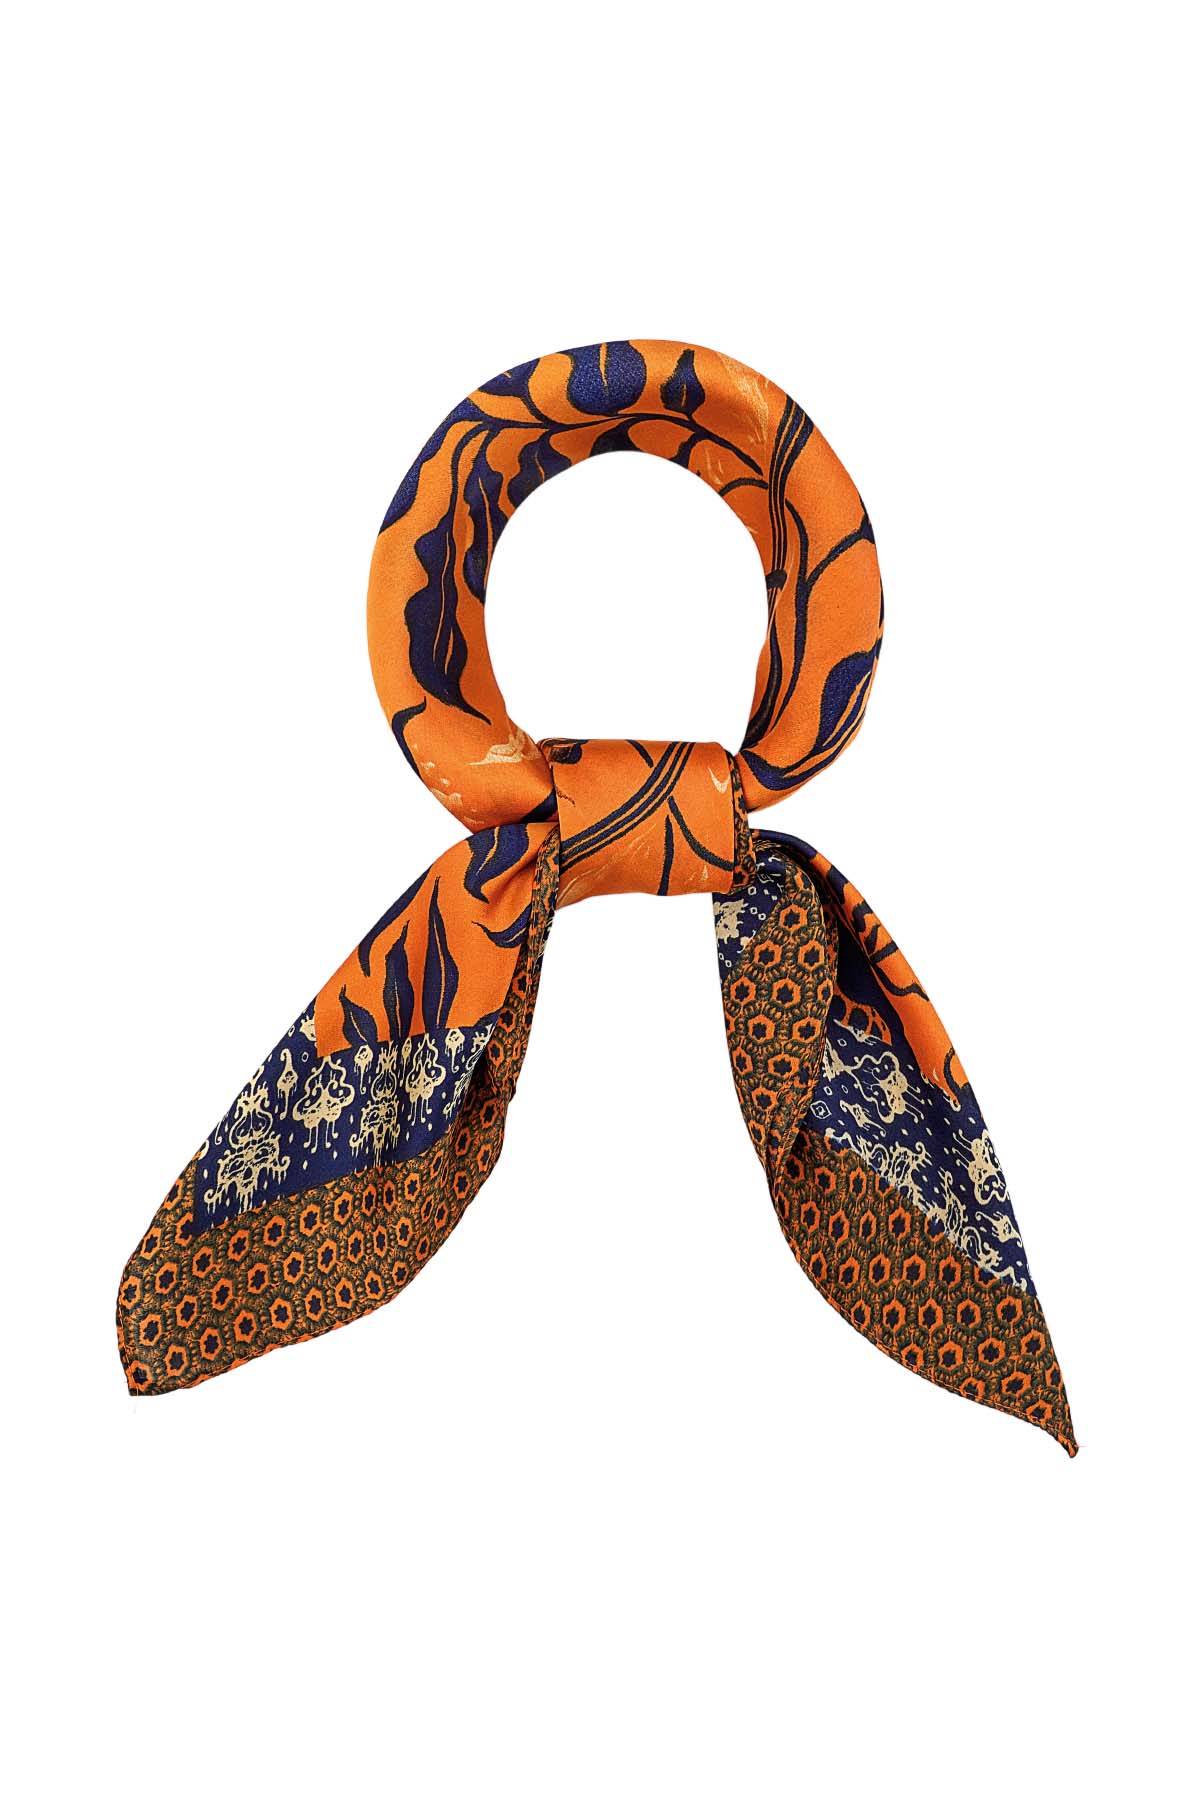 Sjaal stoere herfstprint - oranje 